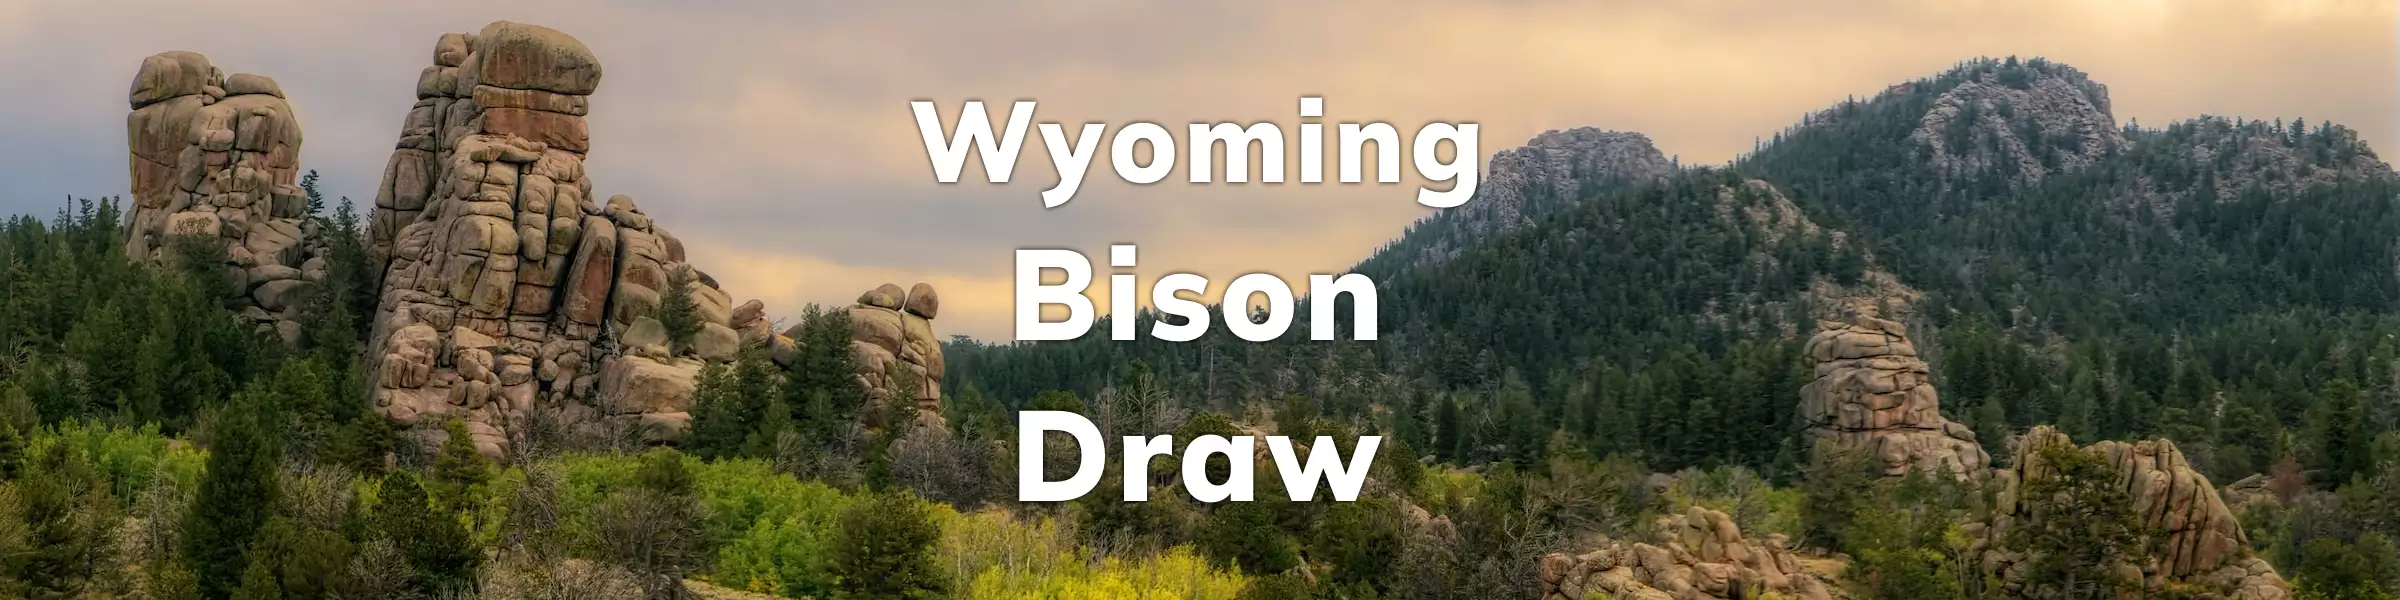 Wyoming Bison Draw